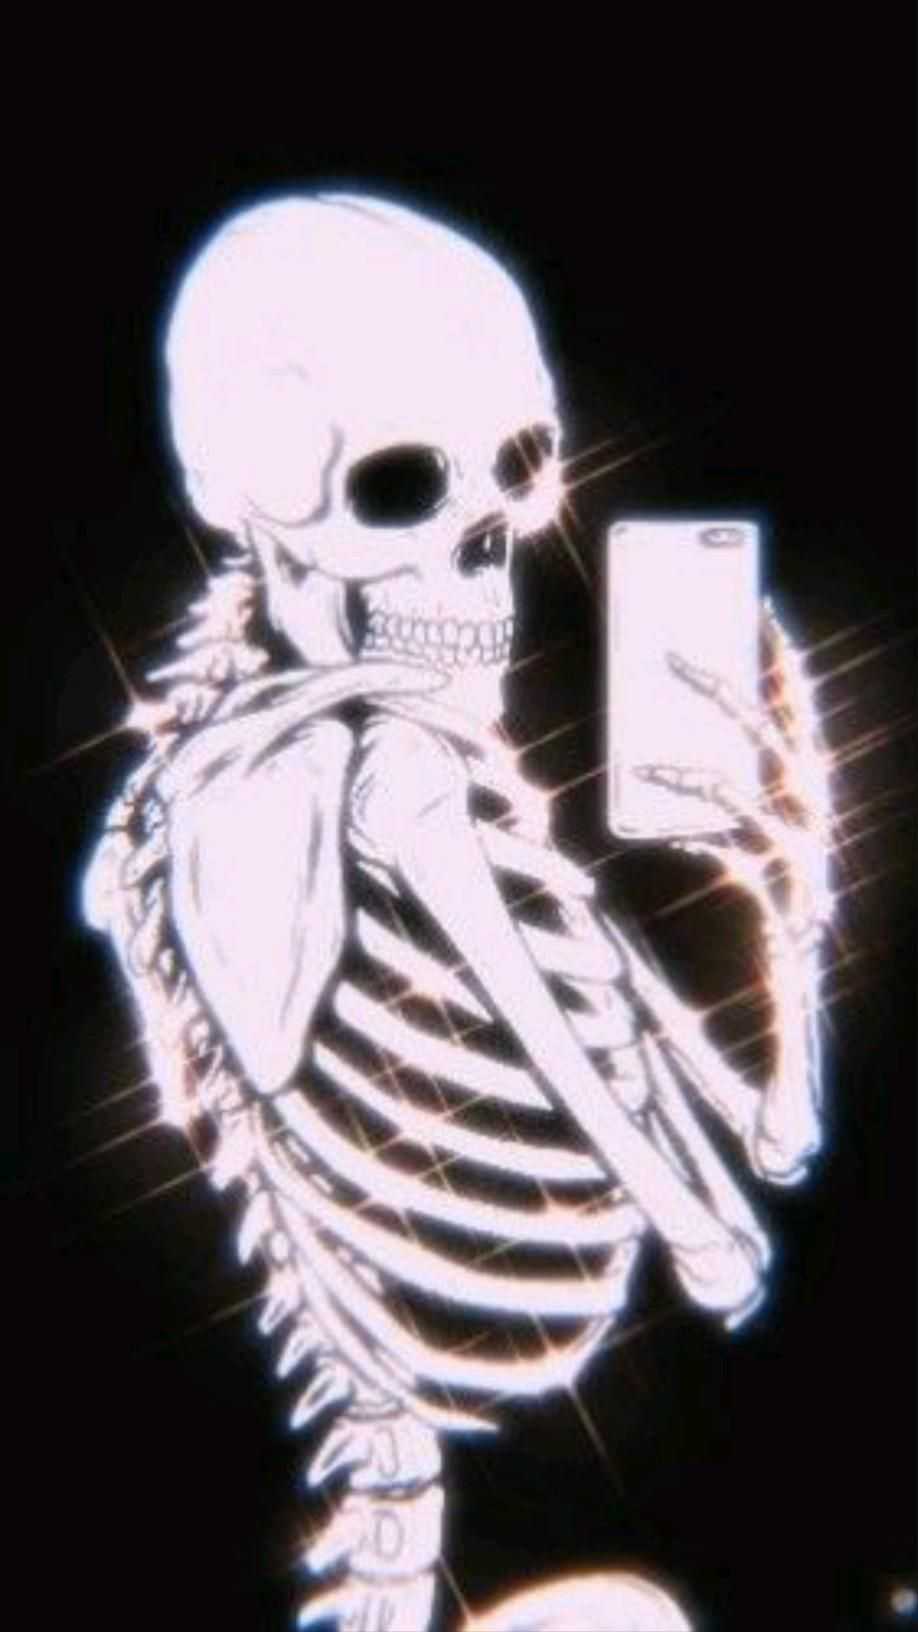 A skeleton holding up an iPhone - Skeleton